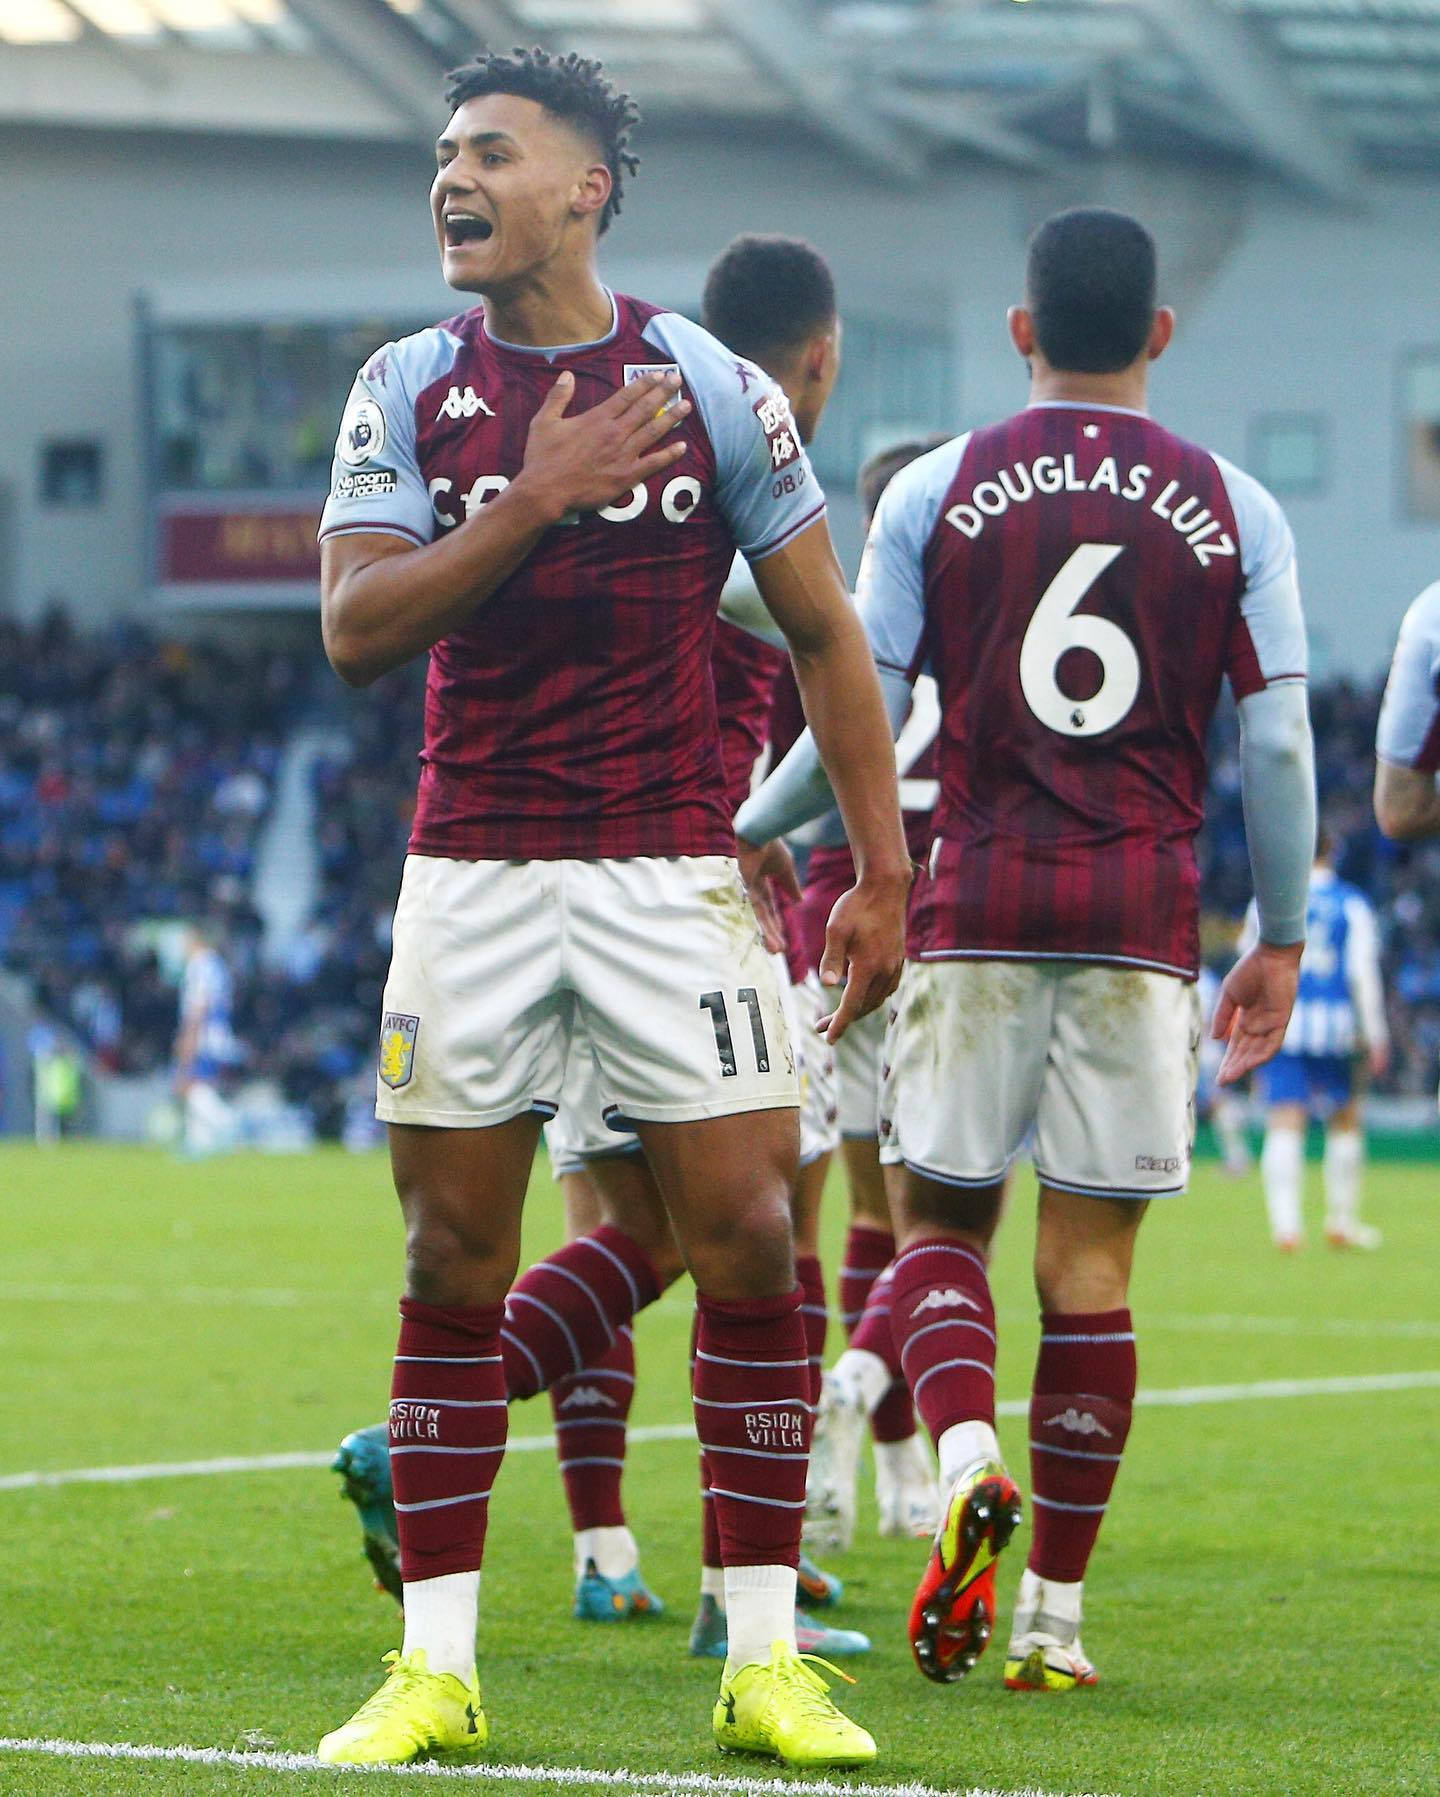 Aston Villa's star, Ollie Watkins, in an intense moment during a game. Wallpaper